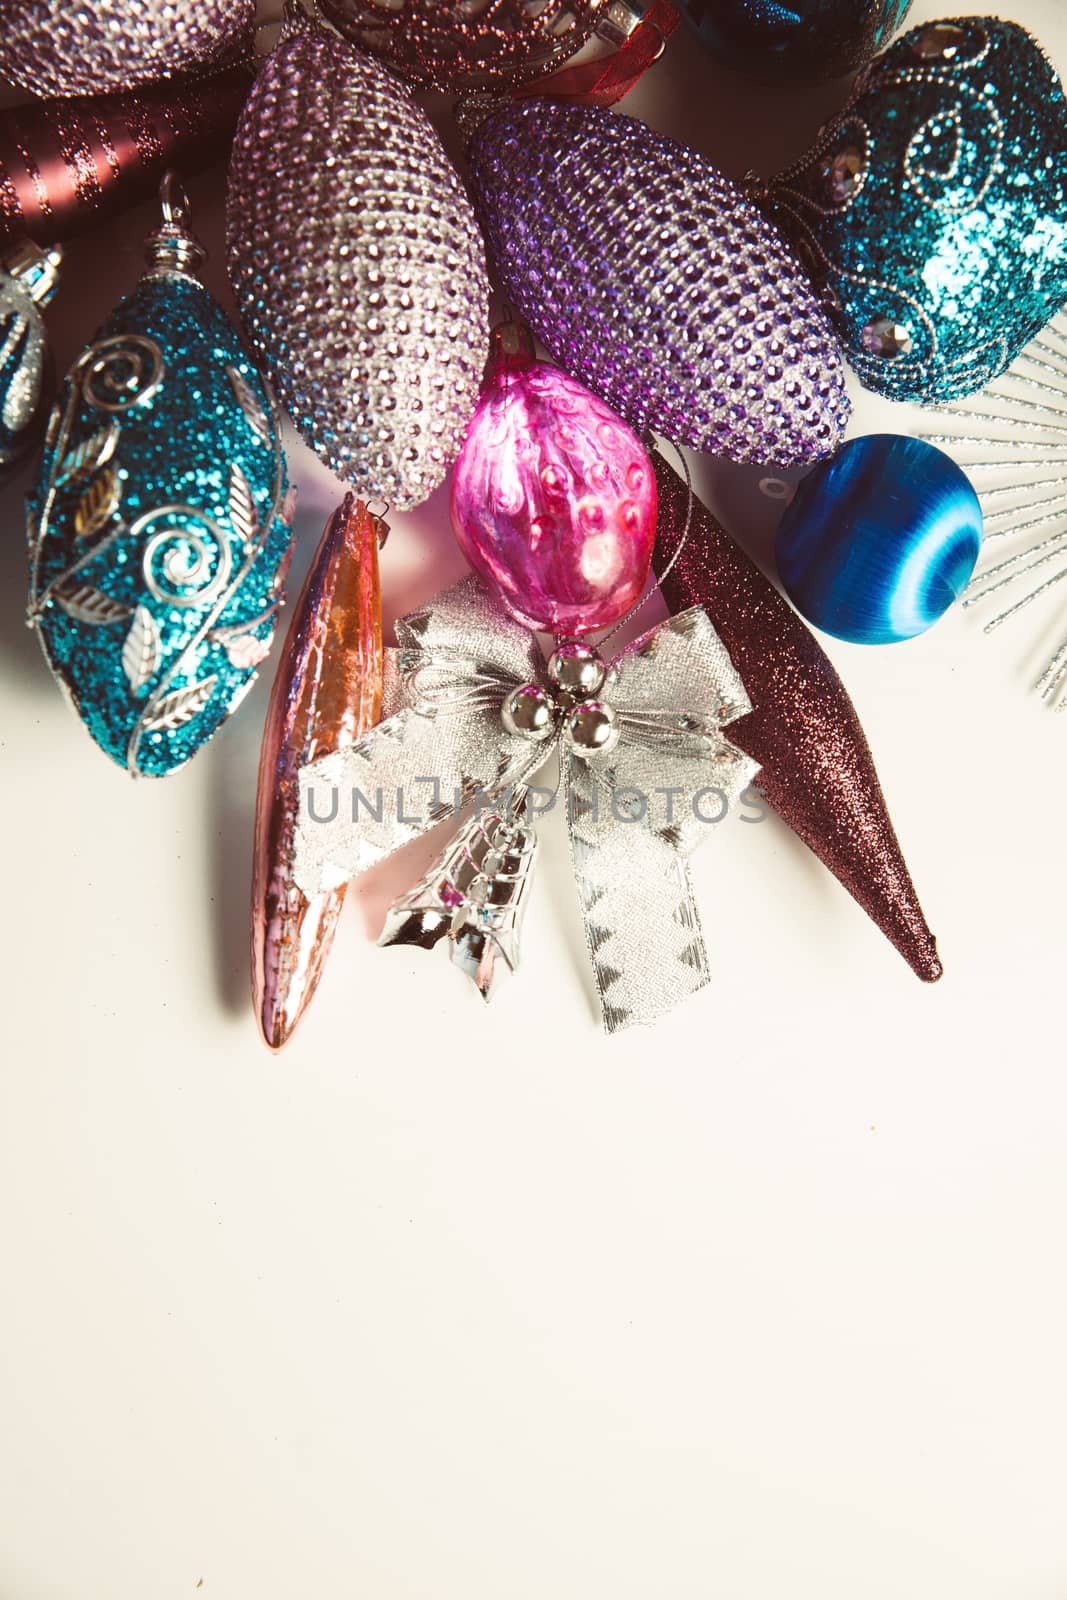 Elegant Christmas 2019 decor closeup, blue and pink colors